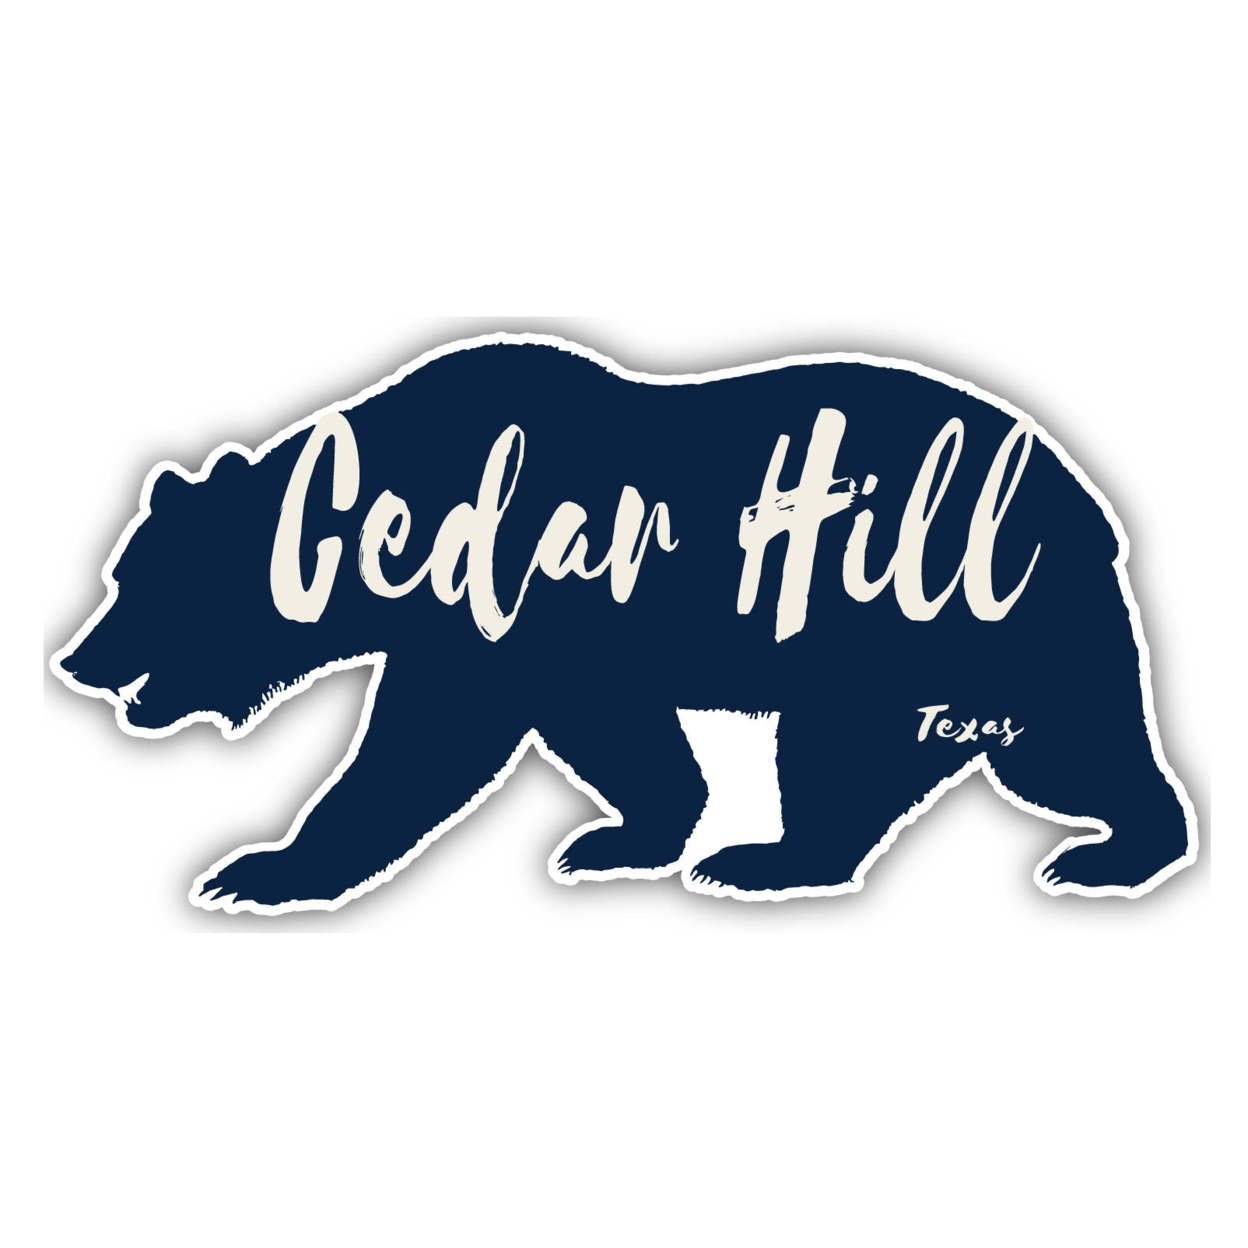 Cedar Hill Texas Souvenir Decorative Stickers (Choose Theme And Size) - Single Unit, 8-Inch, Bear